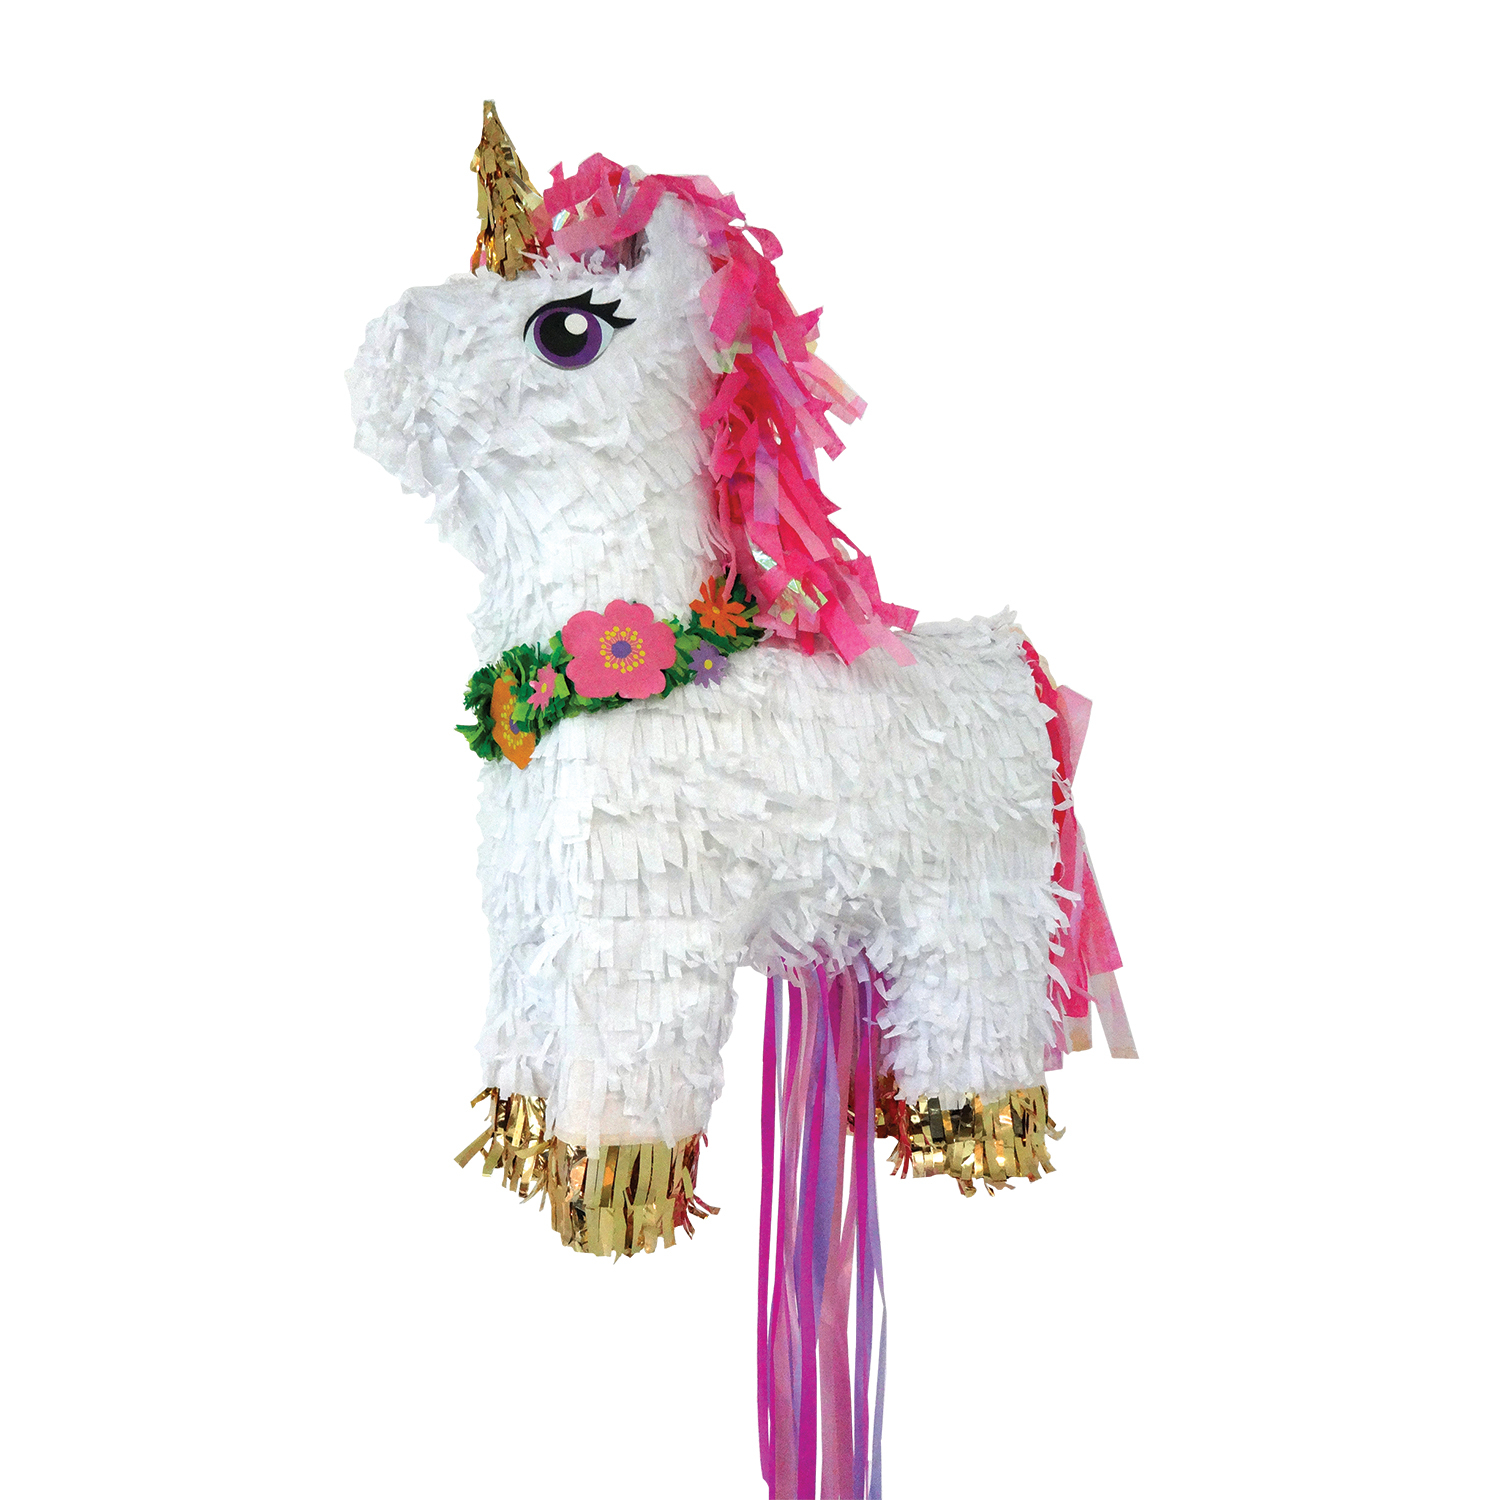 Piñata - Magical Unicorn 